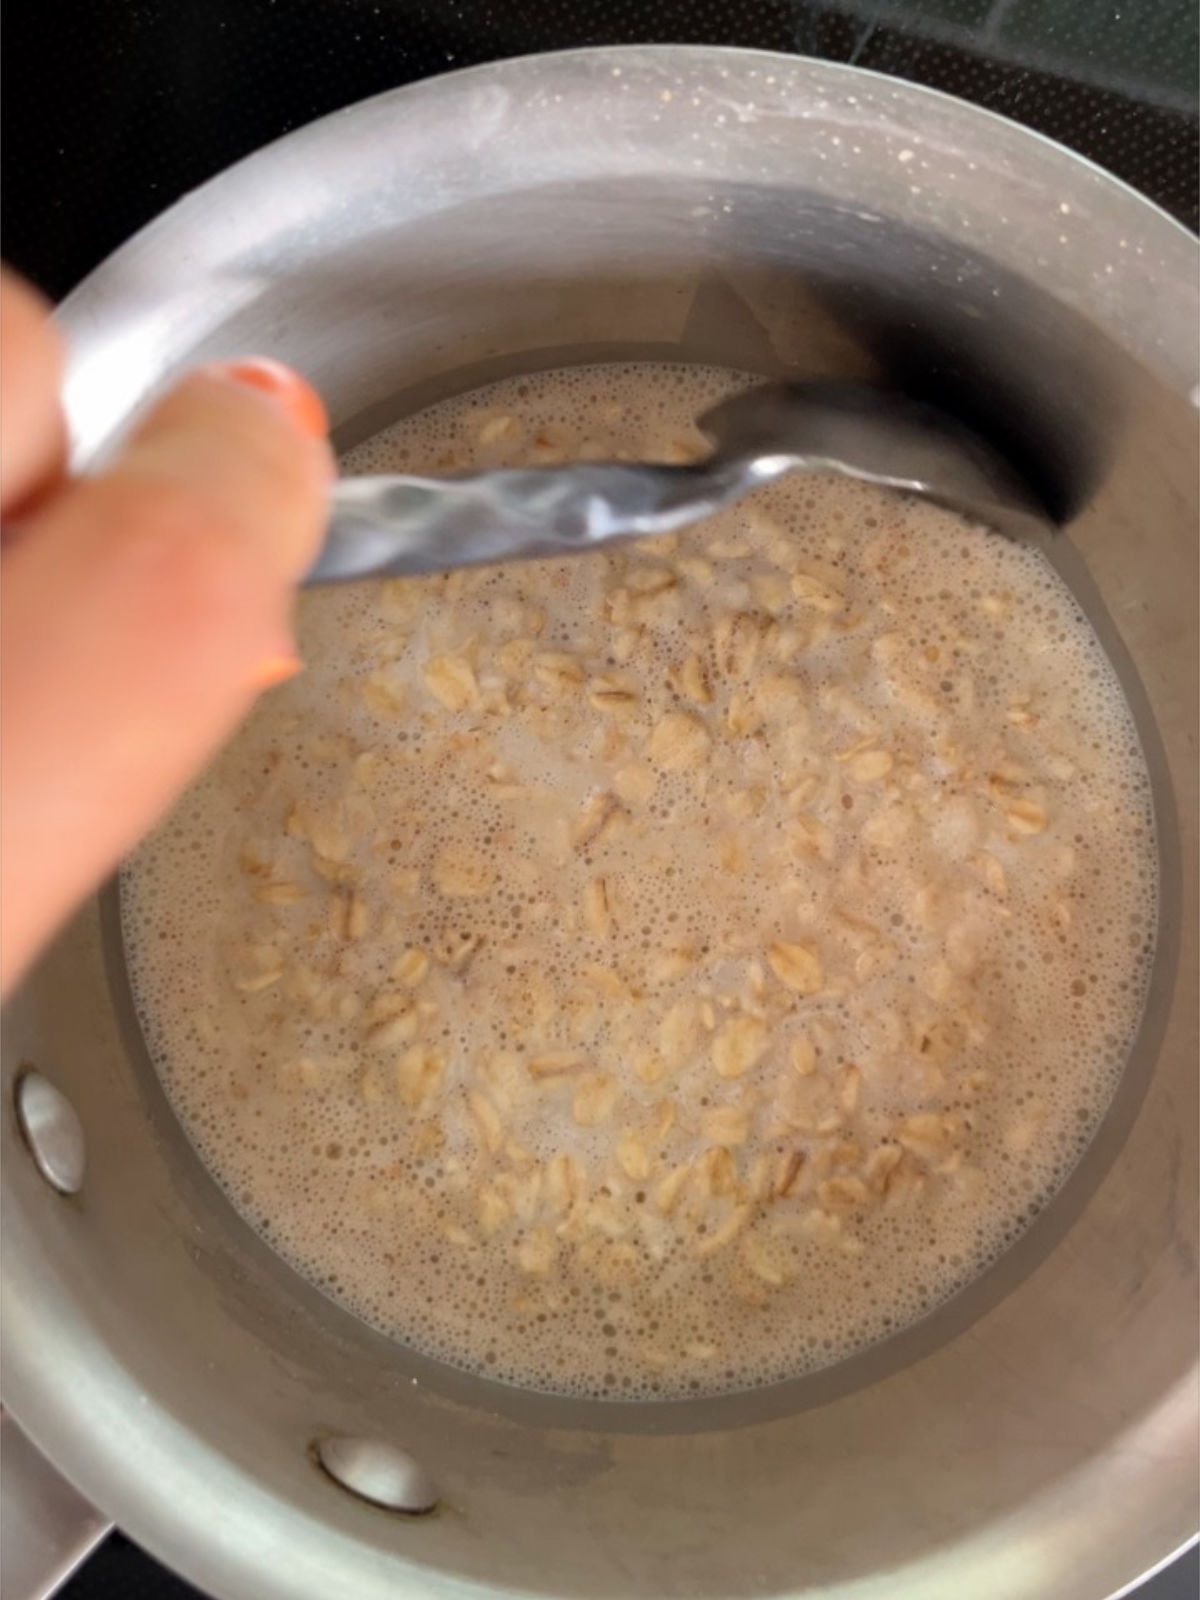 Metal spoon stirring oatmeal in a metal pot.